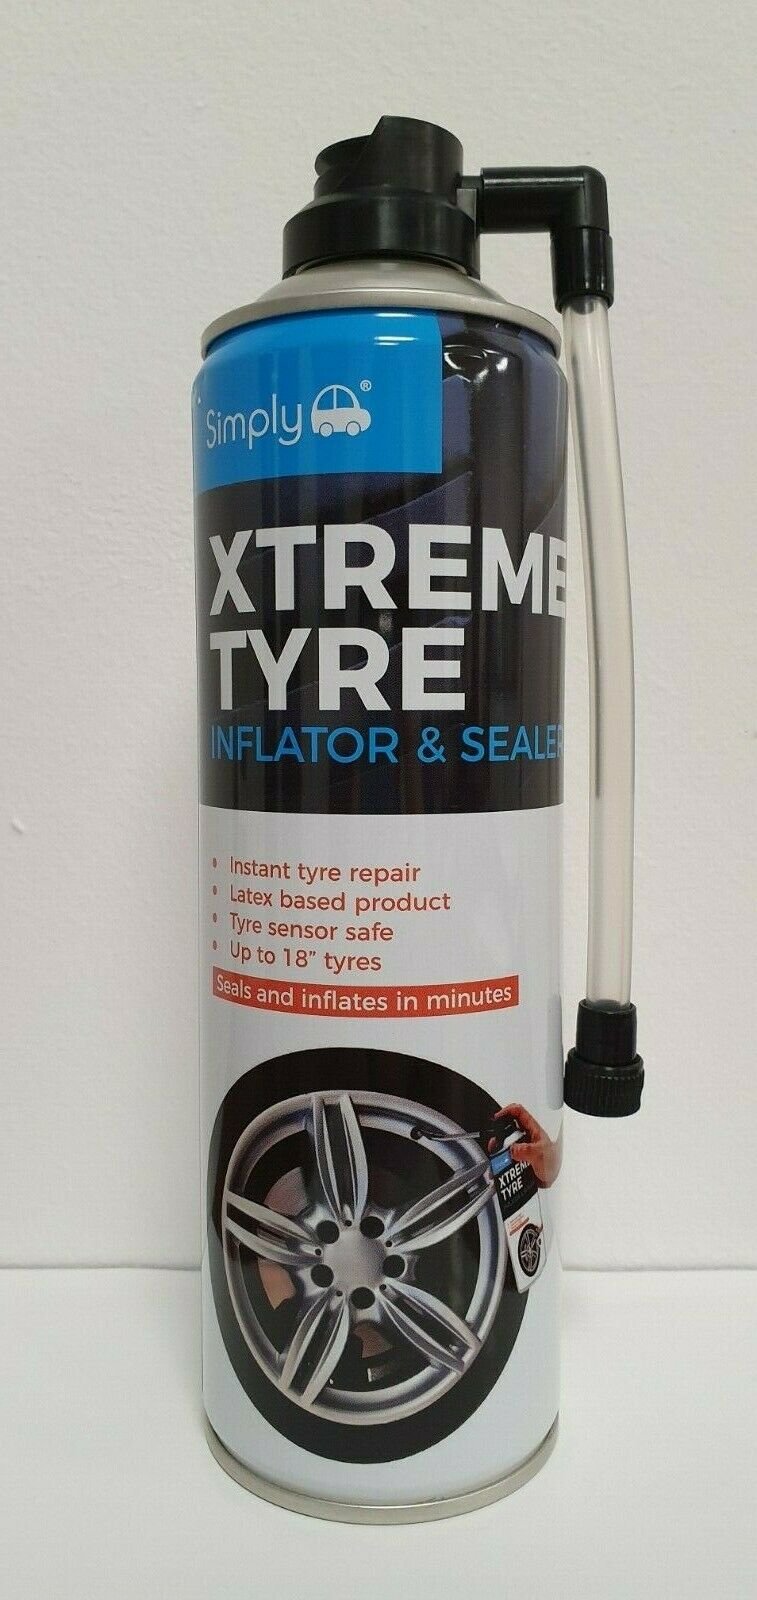 Simply Xtreme Tyre Inflator & Sealer Emergency Puncture Repair 500ml